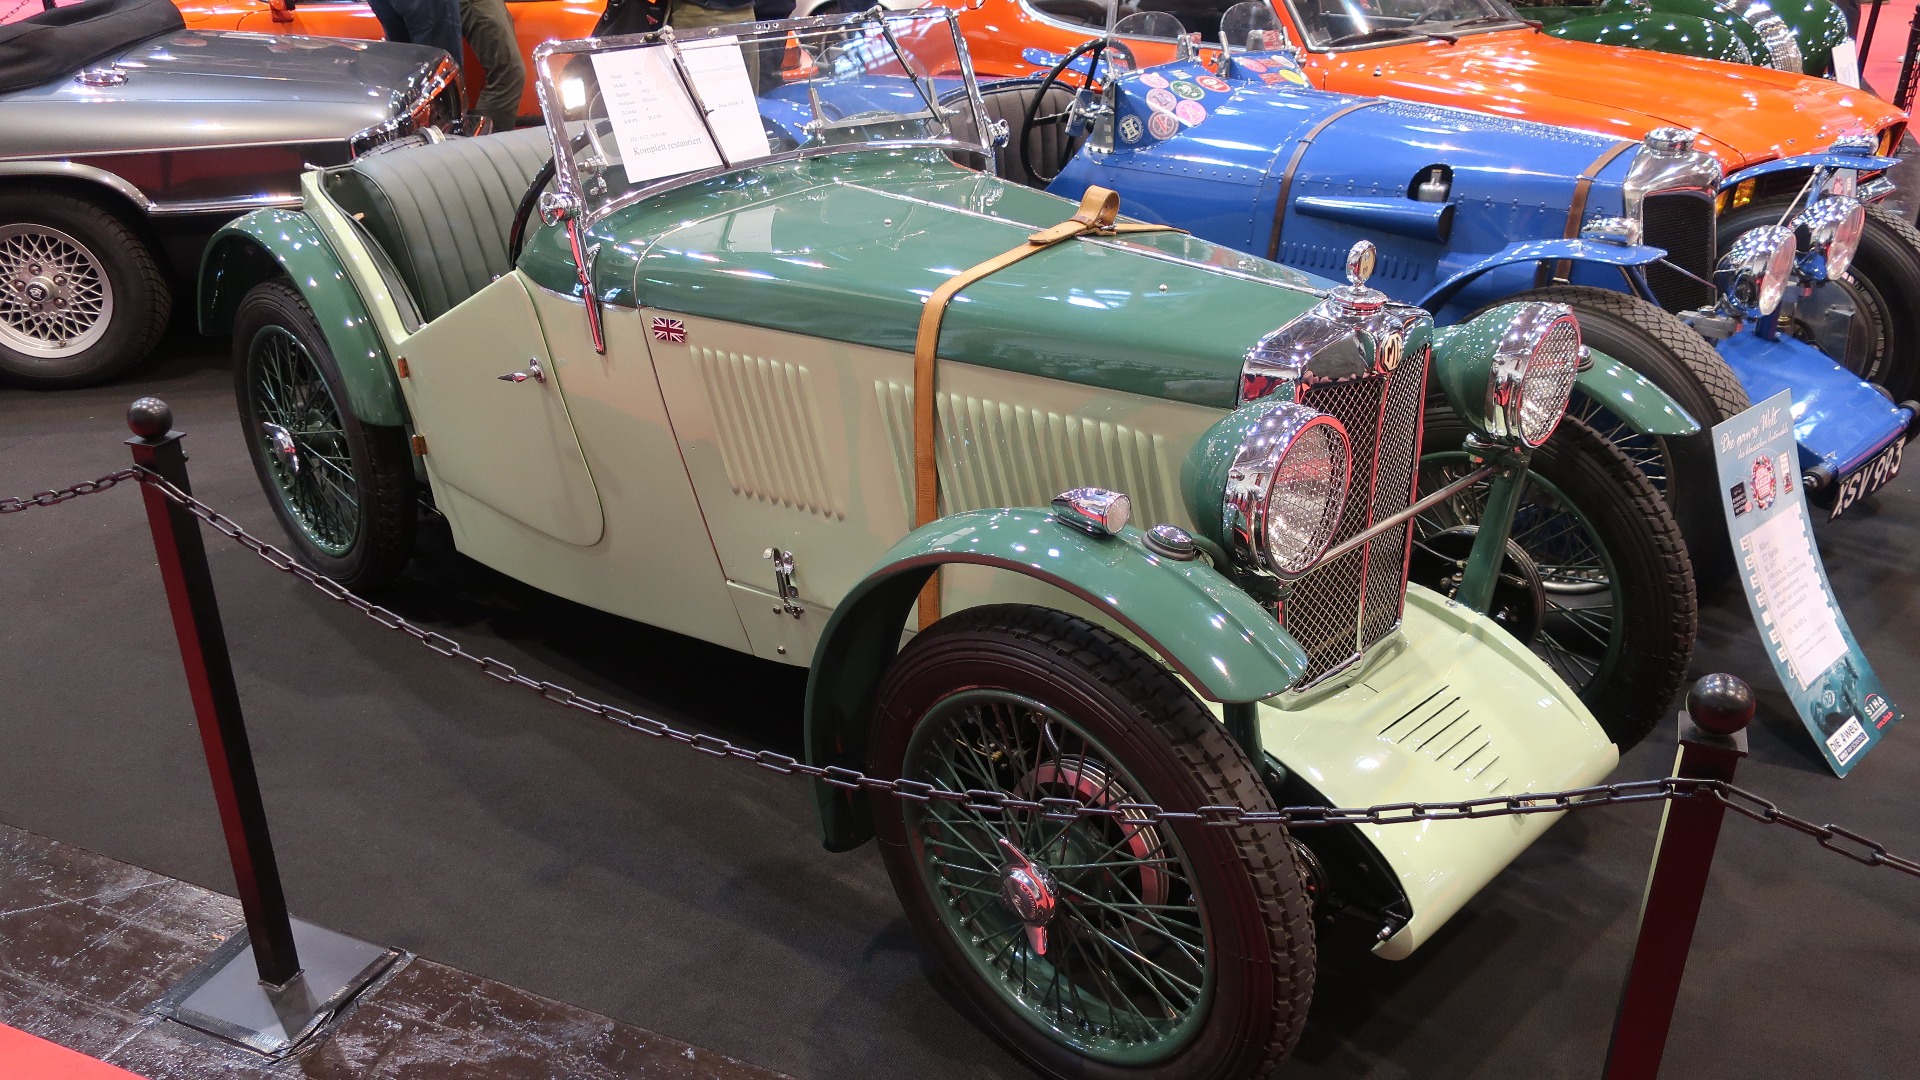 Liten og puslete i superbilselskap rundt omkring, men denne 1932 MG J2 med 850 ccm firer på 36 hk var bare sjarmerende. Og hyggelig pris også, 38.000 Euro.